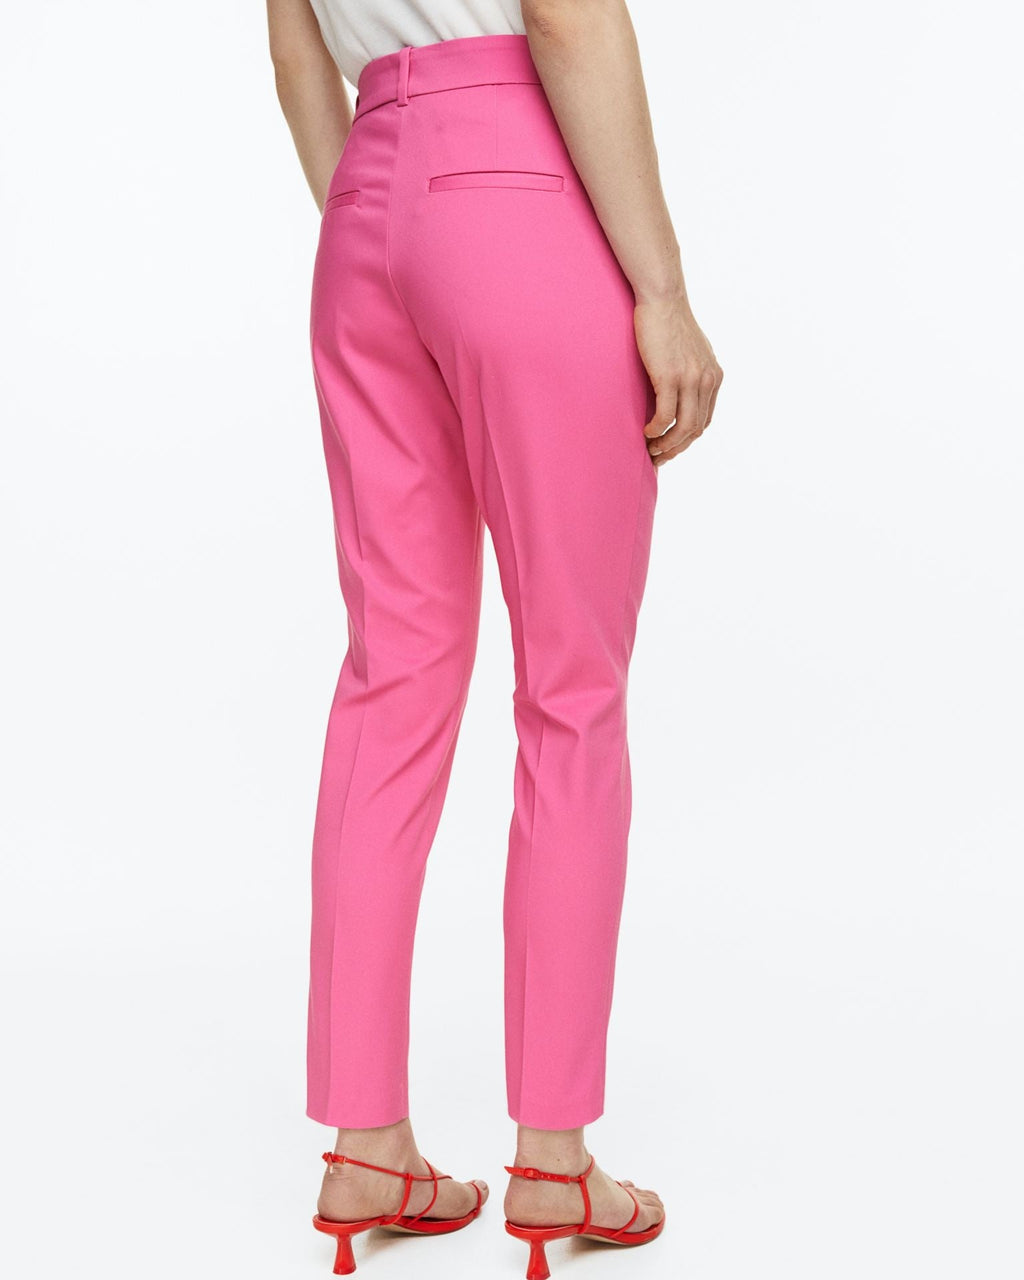 H&M Slacks Pant Pink